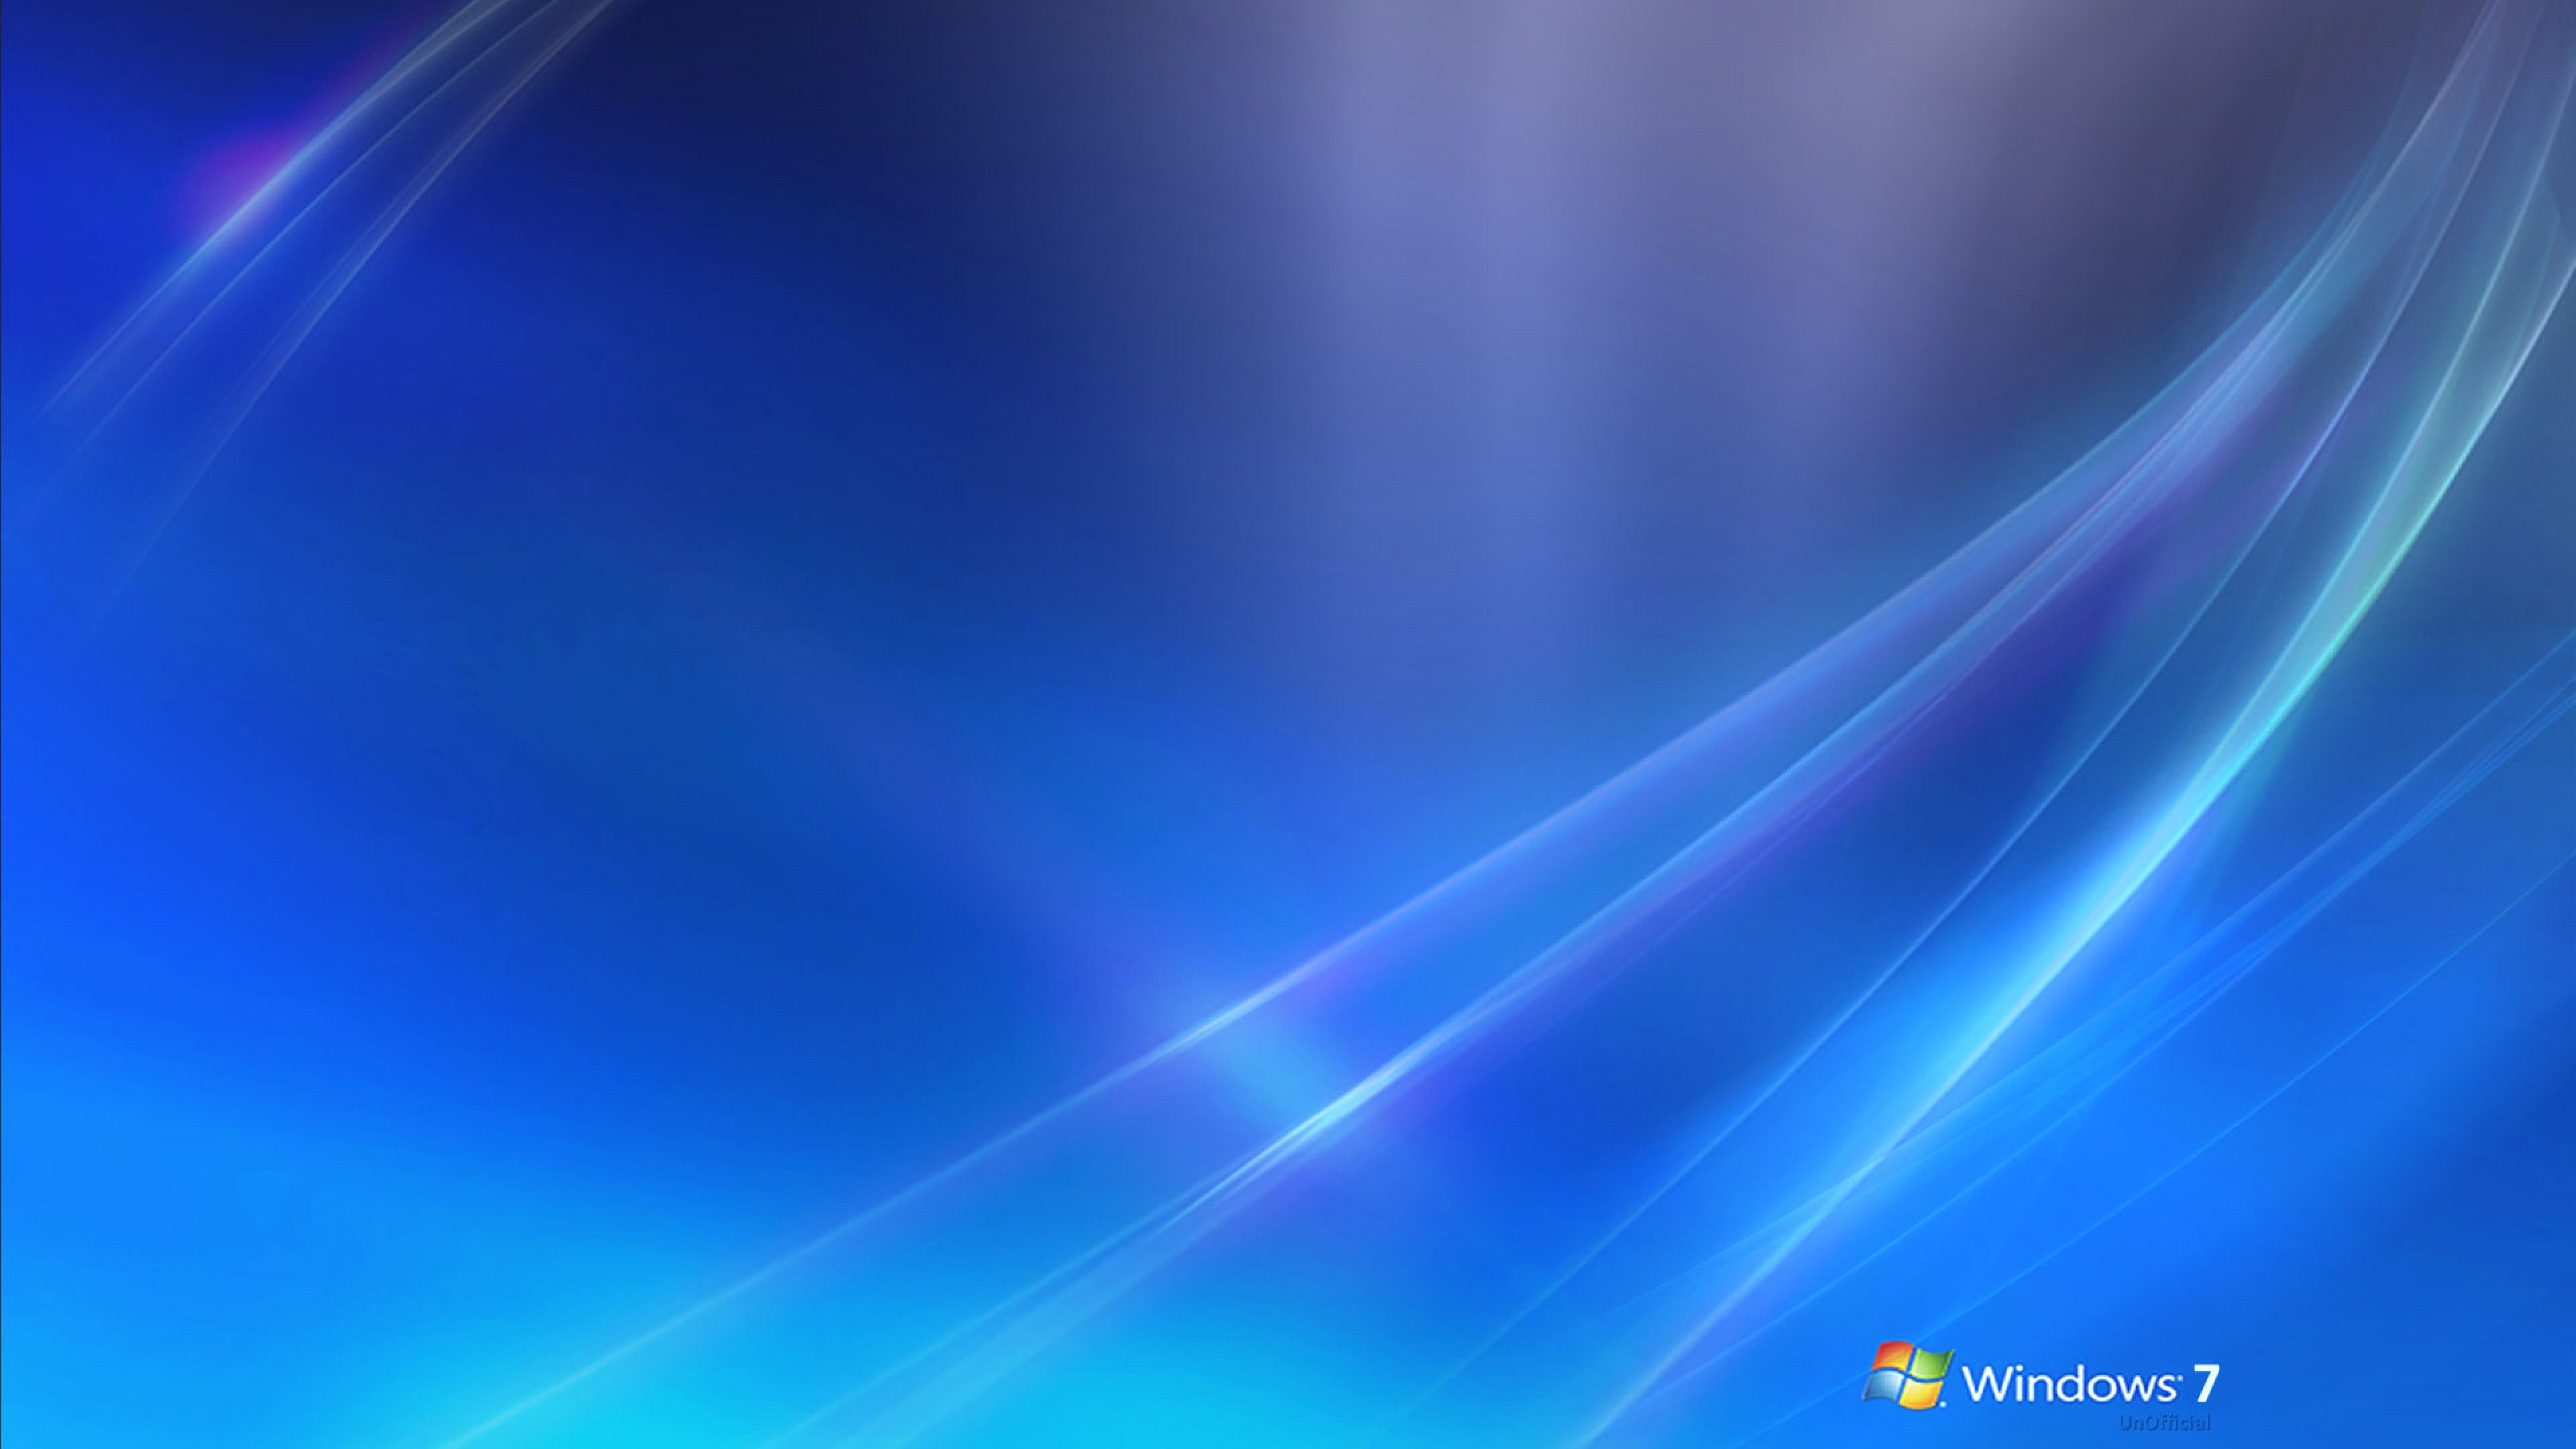 Windows 7 Blue HD Wallpaper 4K Ultra HD